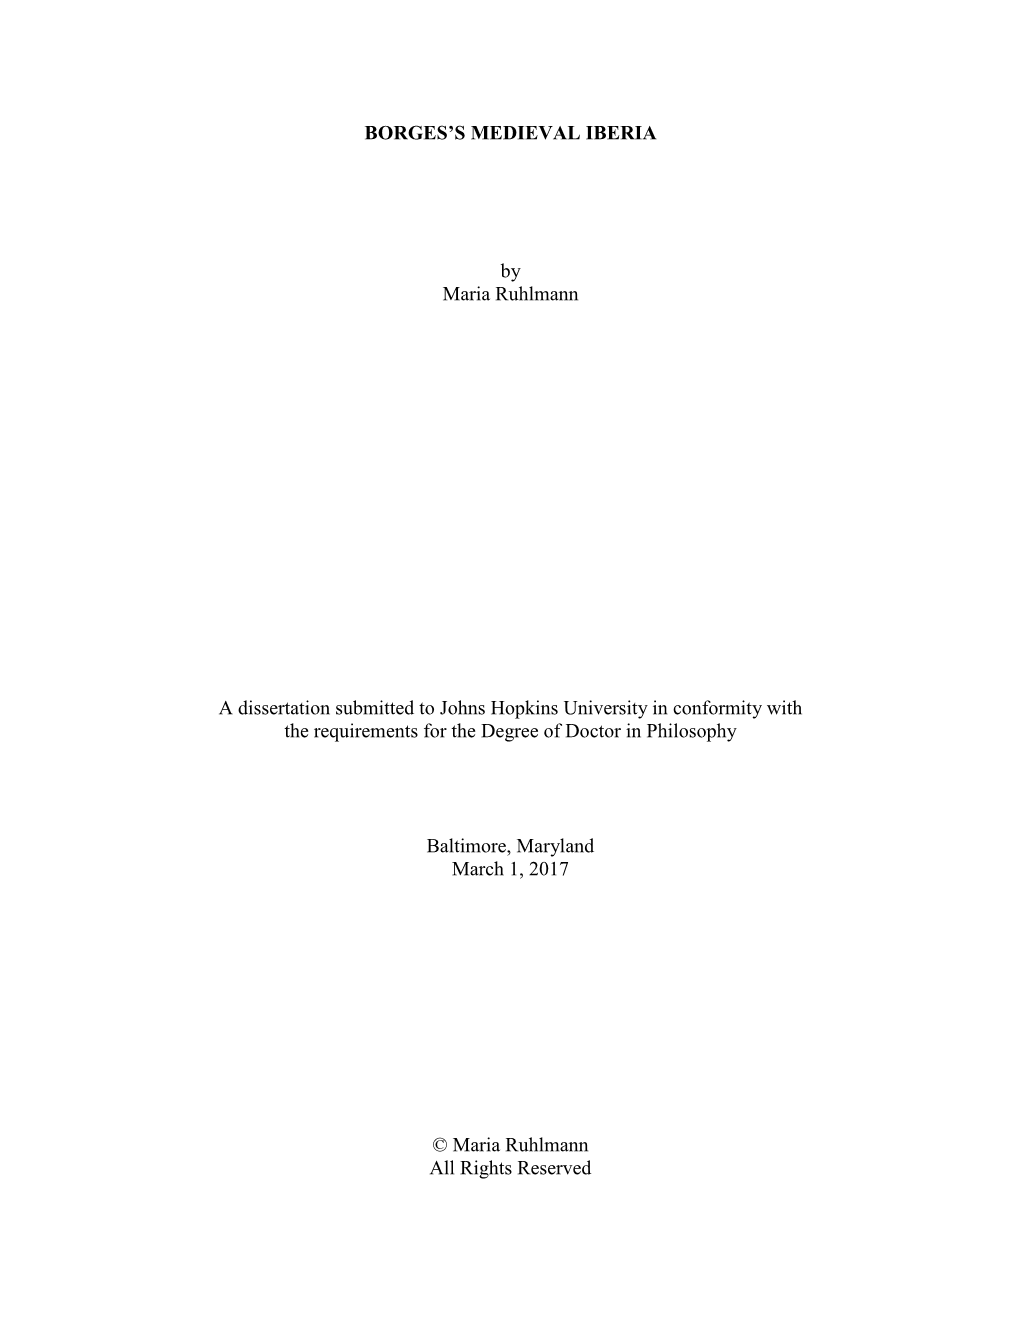 BORGES's MEDIEVAL IBERIA by Maria Ruhlmann a Dissertation